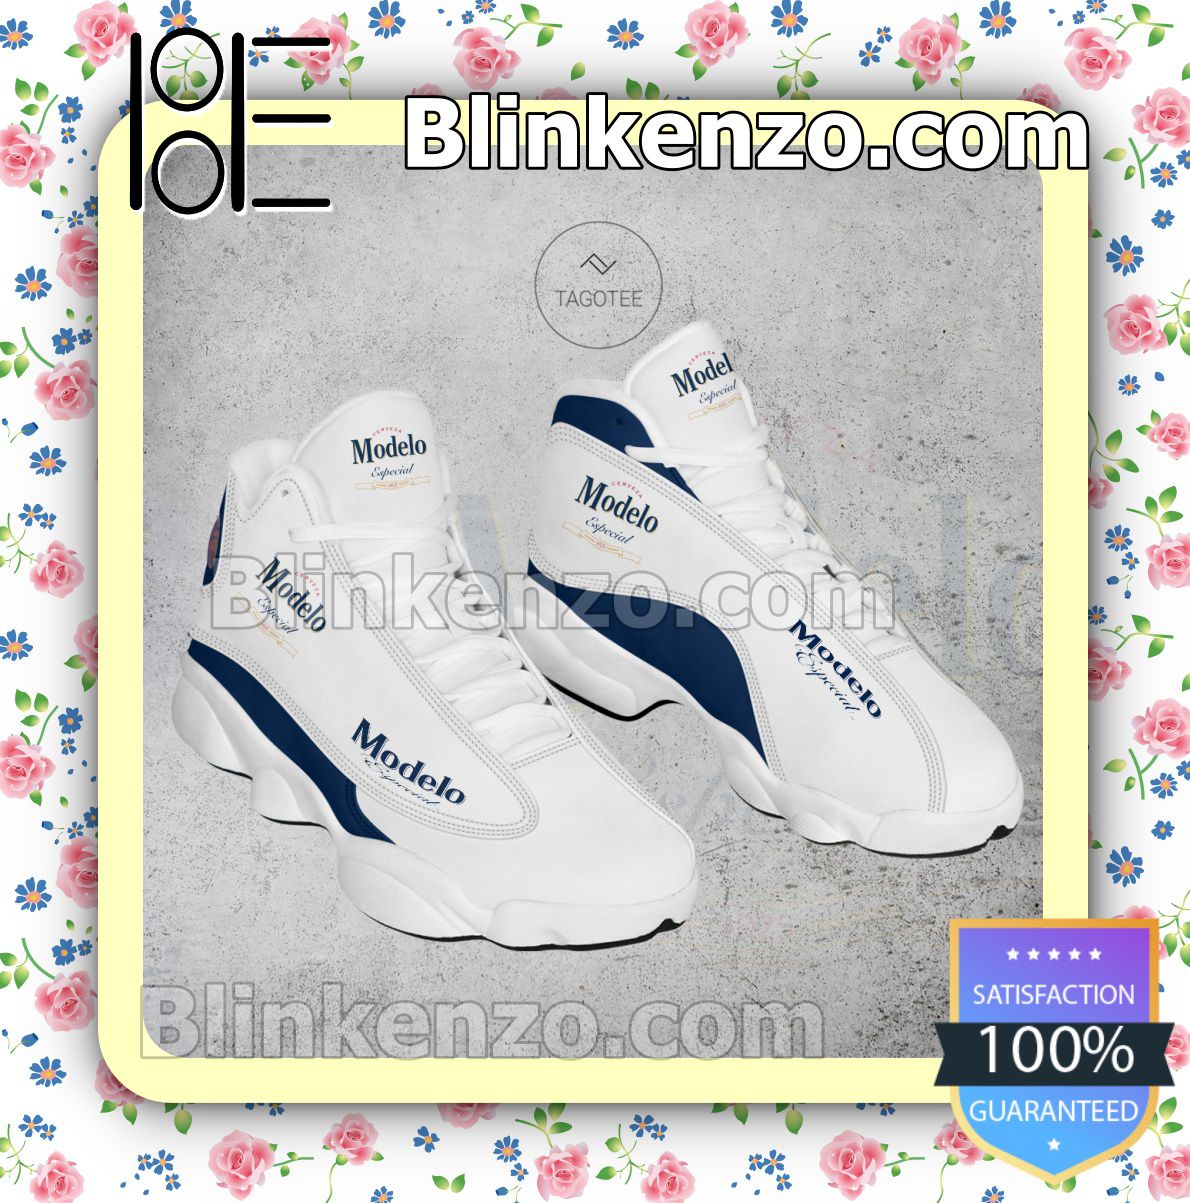 Modelo Especial Brand Air Jordan Sneakers - Blinkenzo